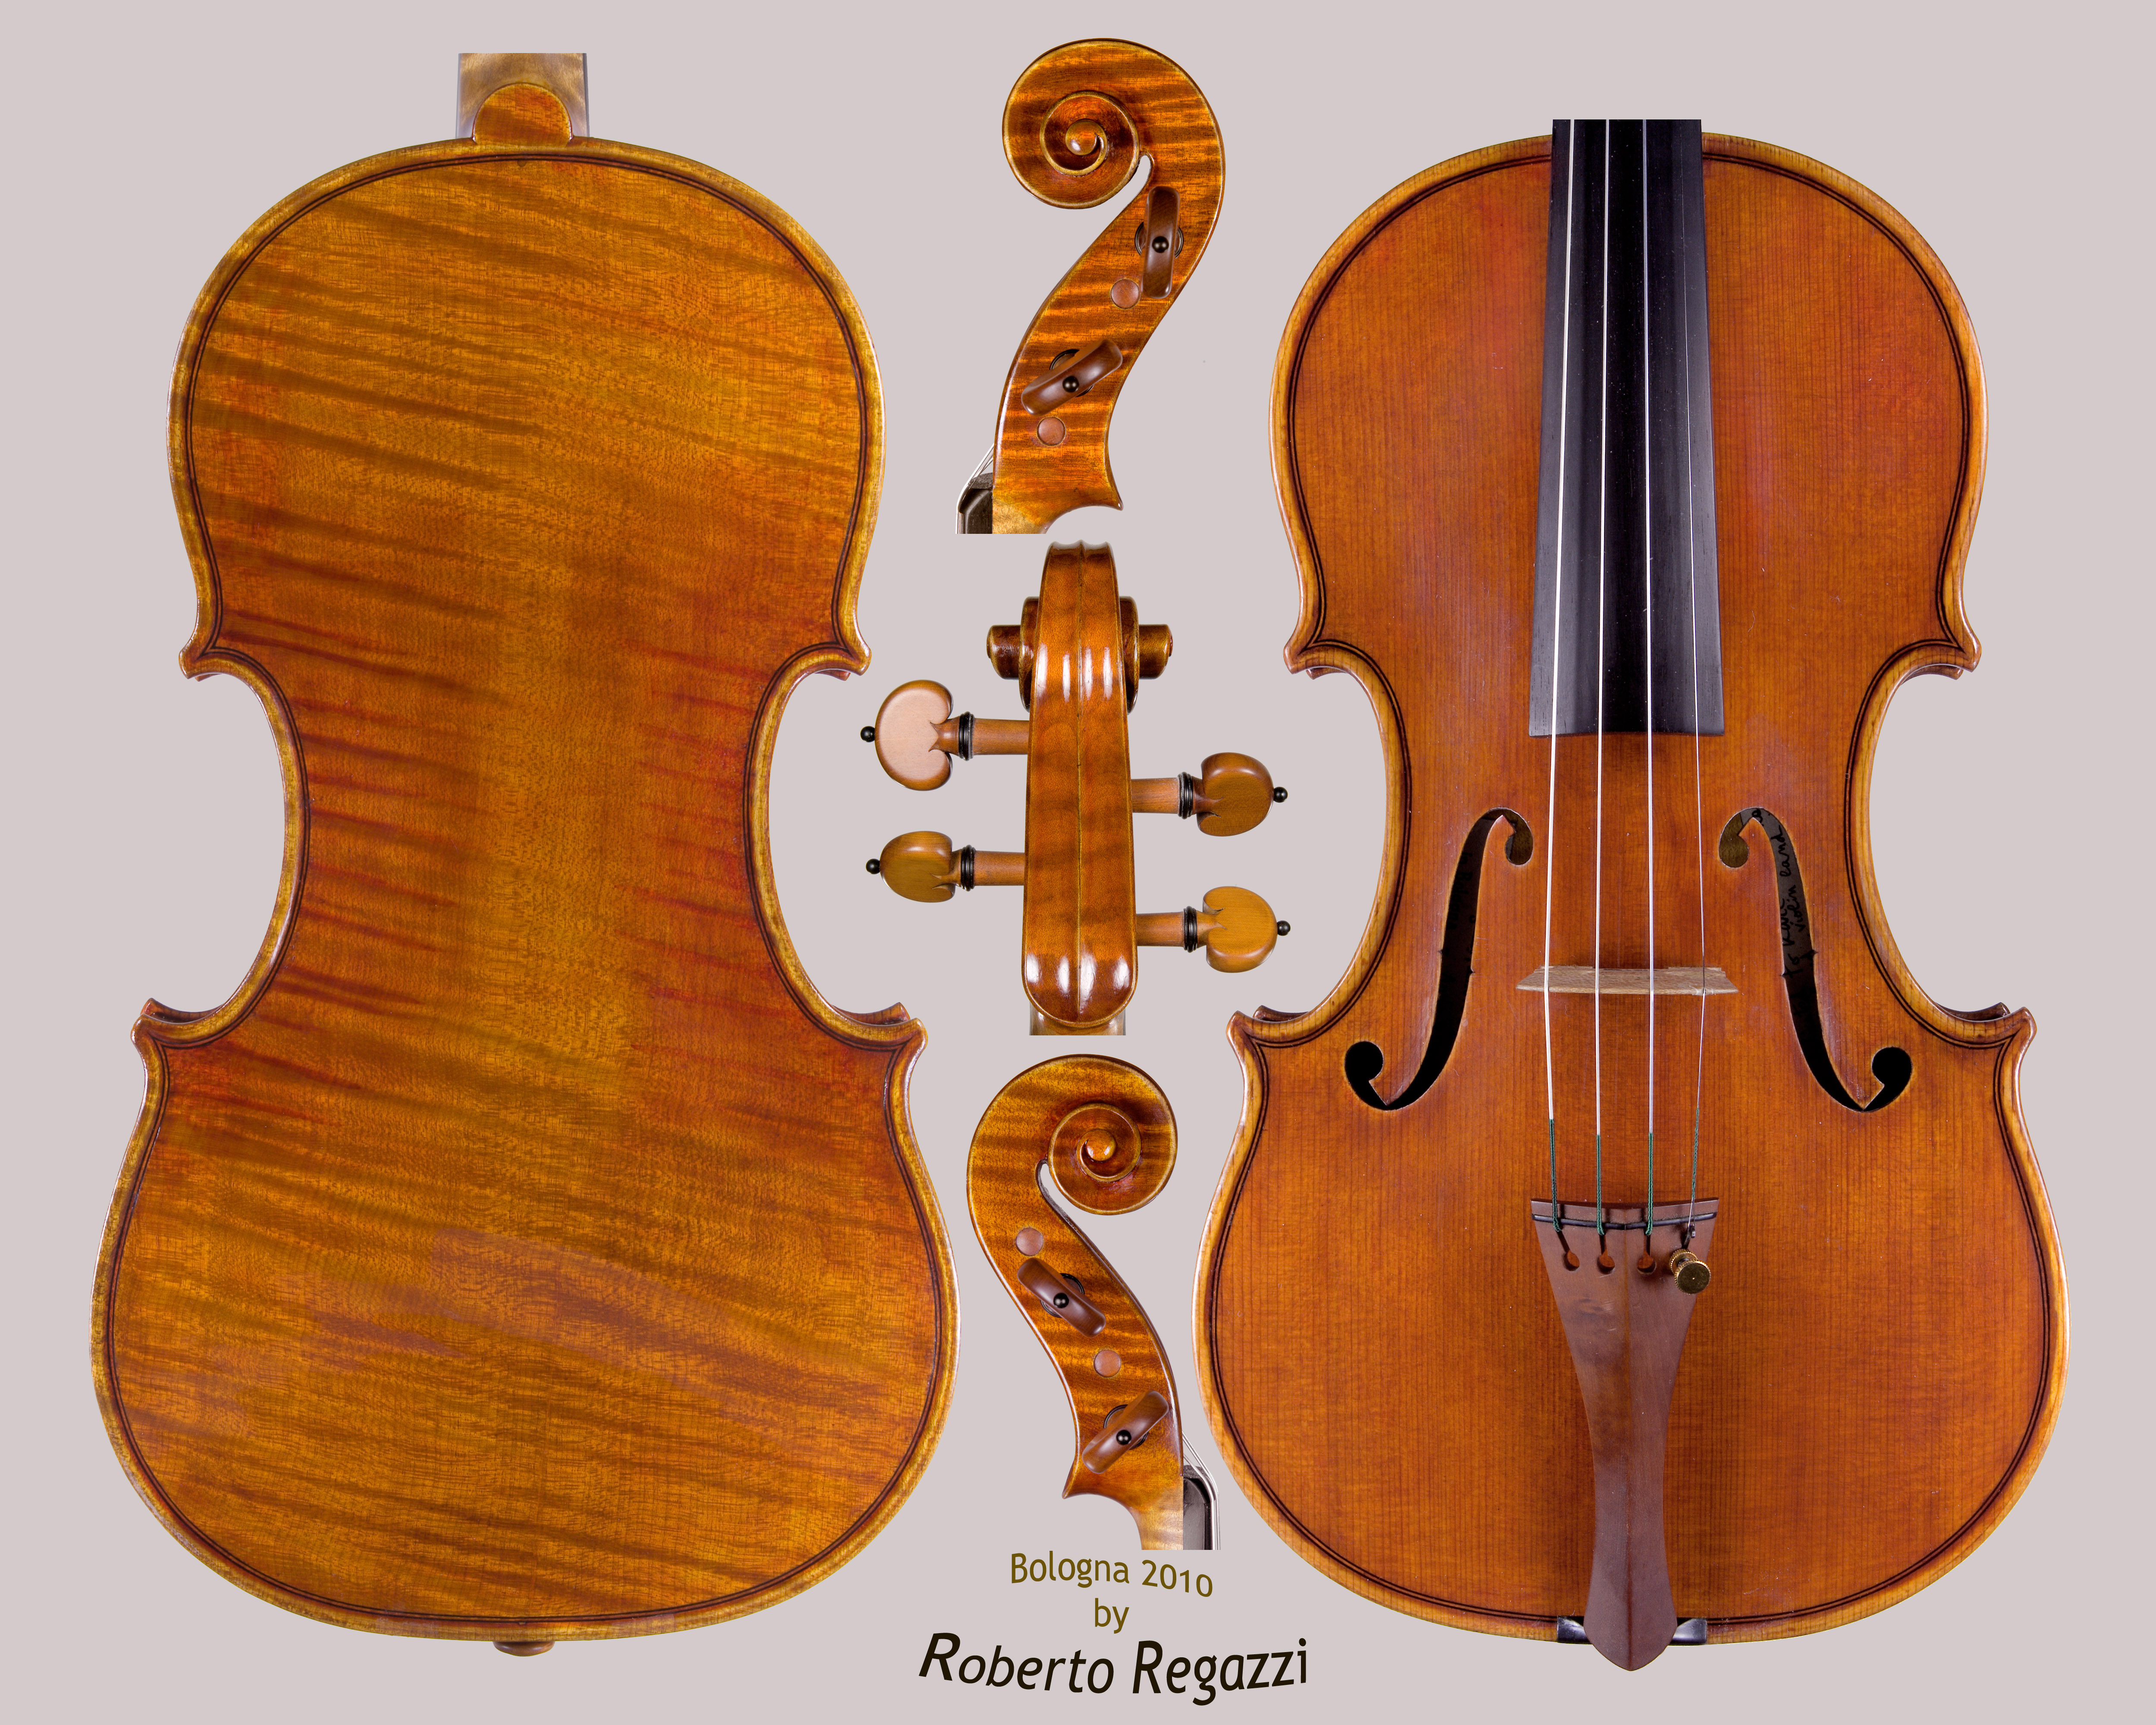 Roberto Regazzi violin 2010